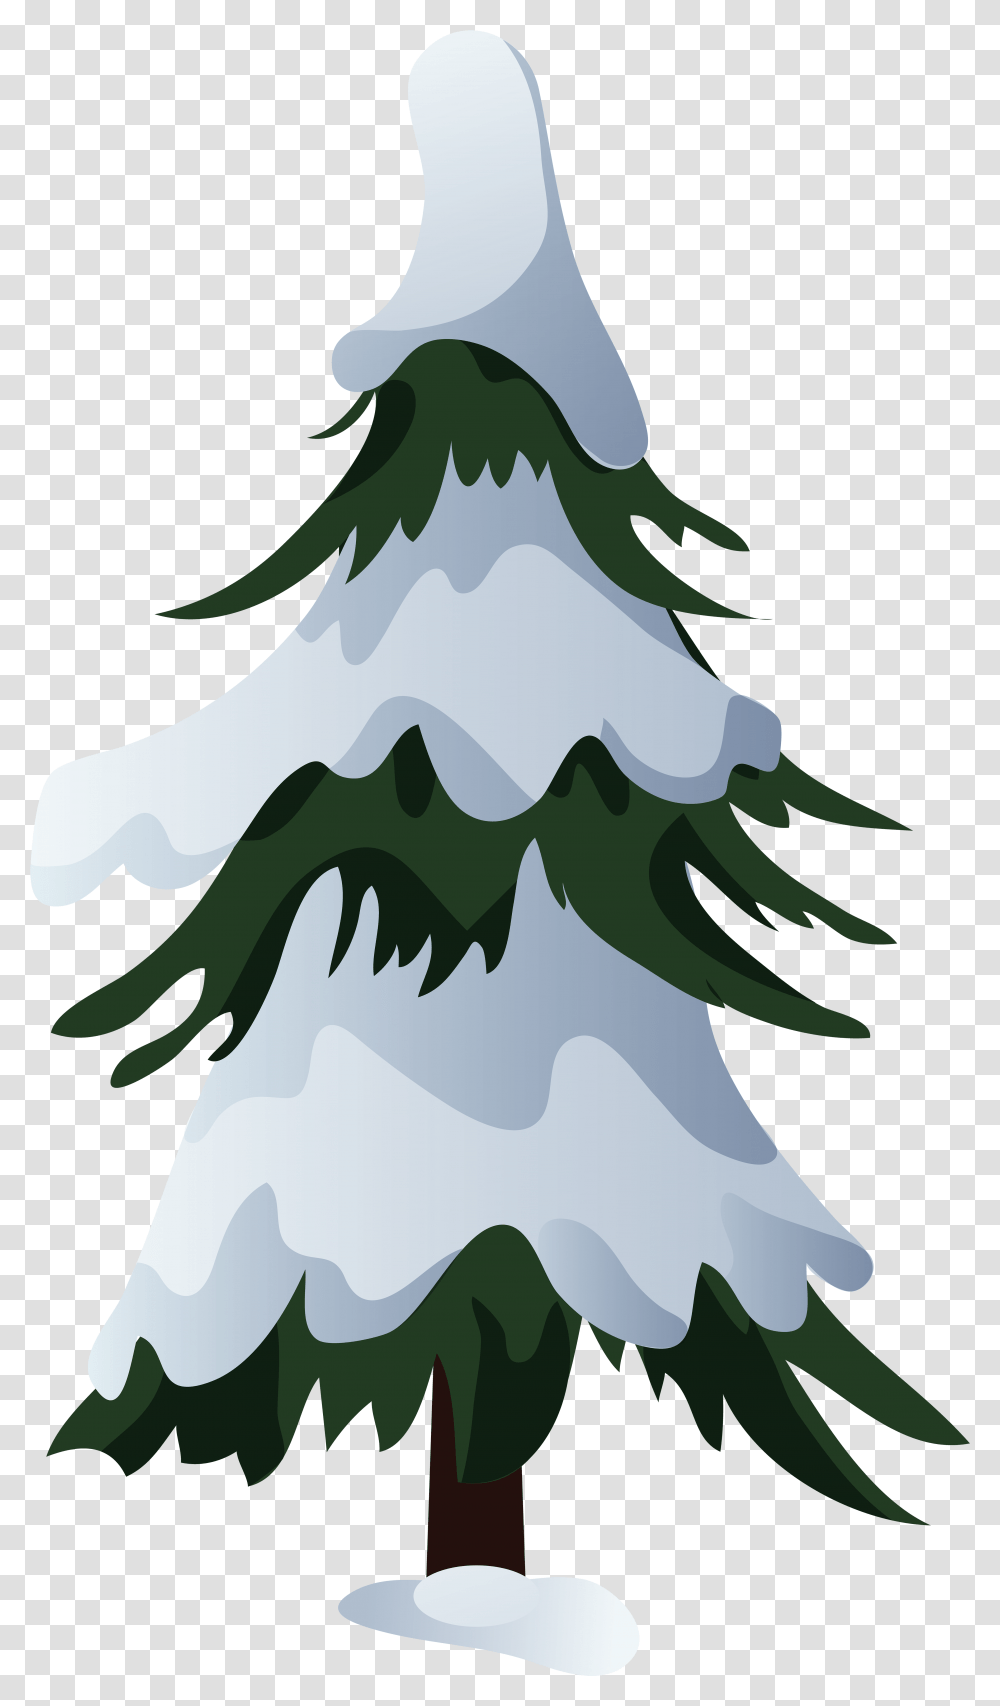 Snowy Pine Trees Clipart, Plant, Fir, Ornament, Conifer Transparent Png